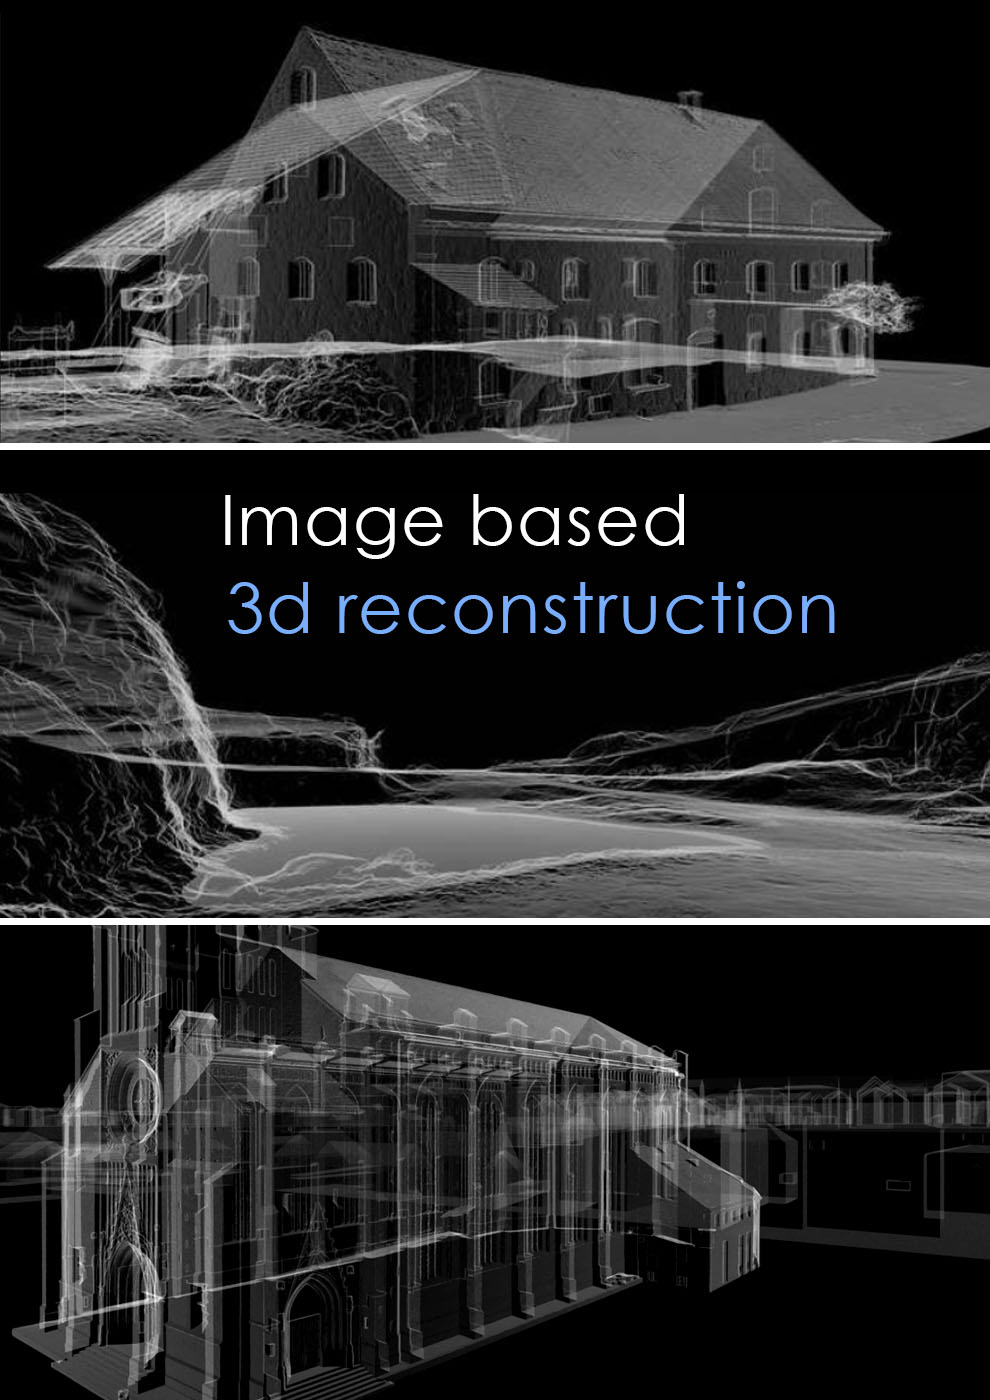 image-based-3d-reconstruction-mobile